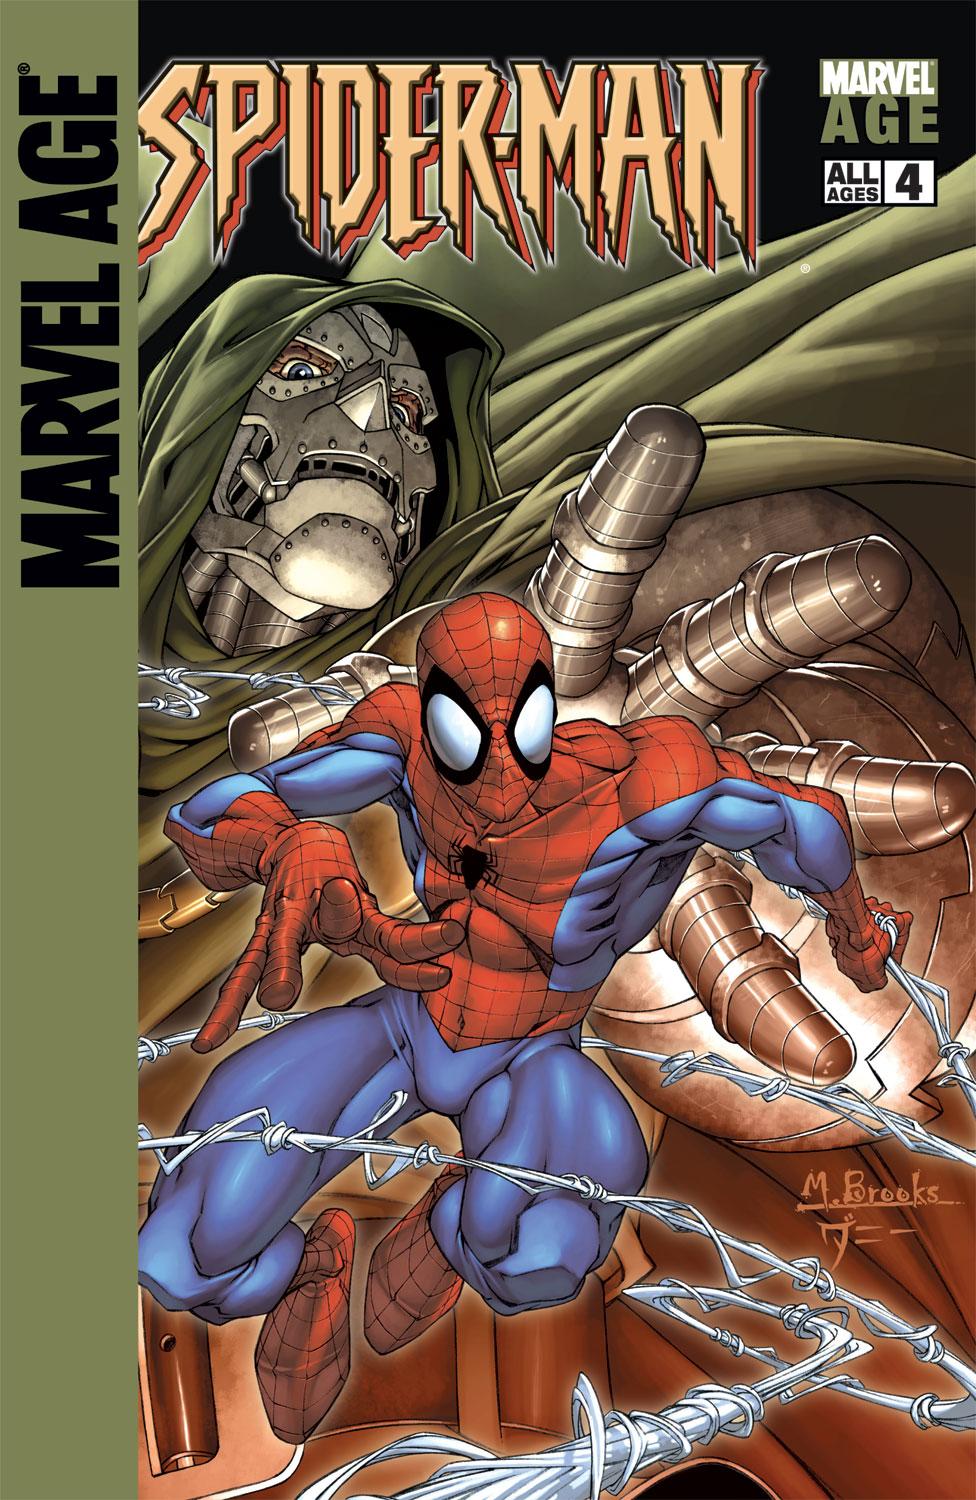 Marvel Age Spider-Man (2004) #4